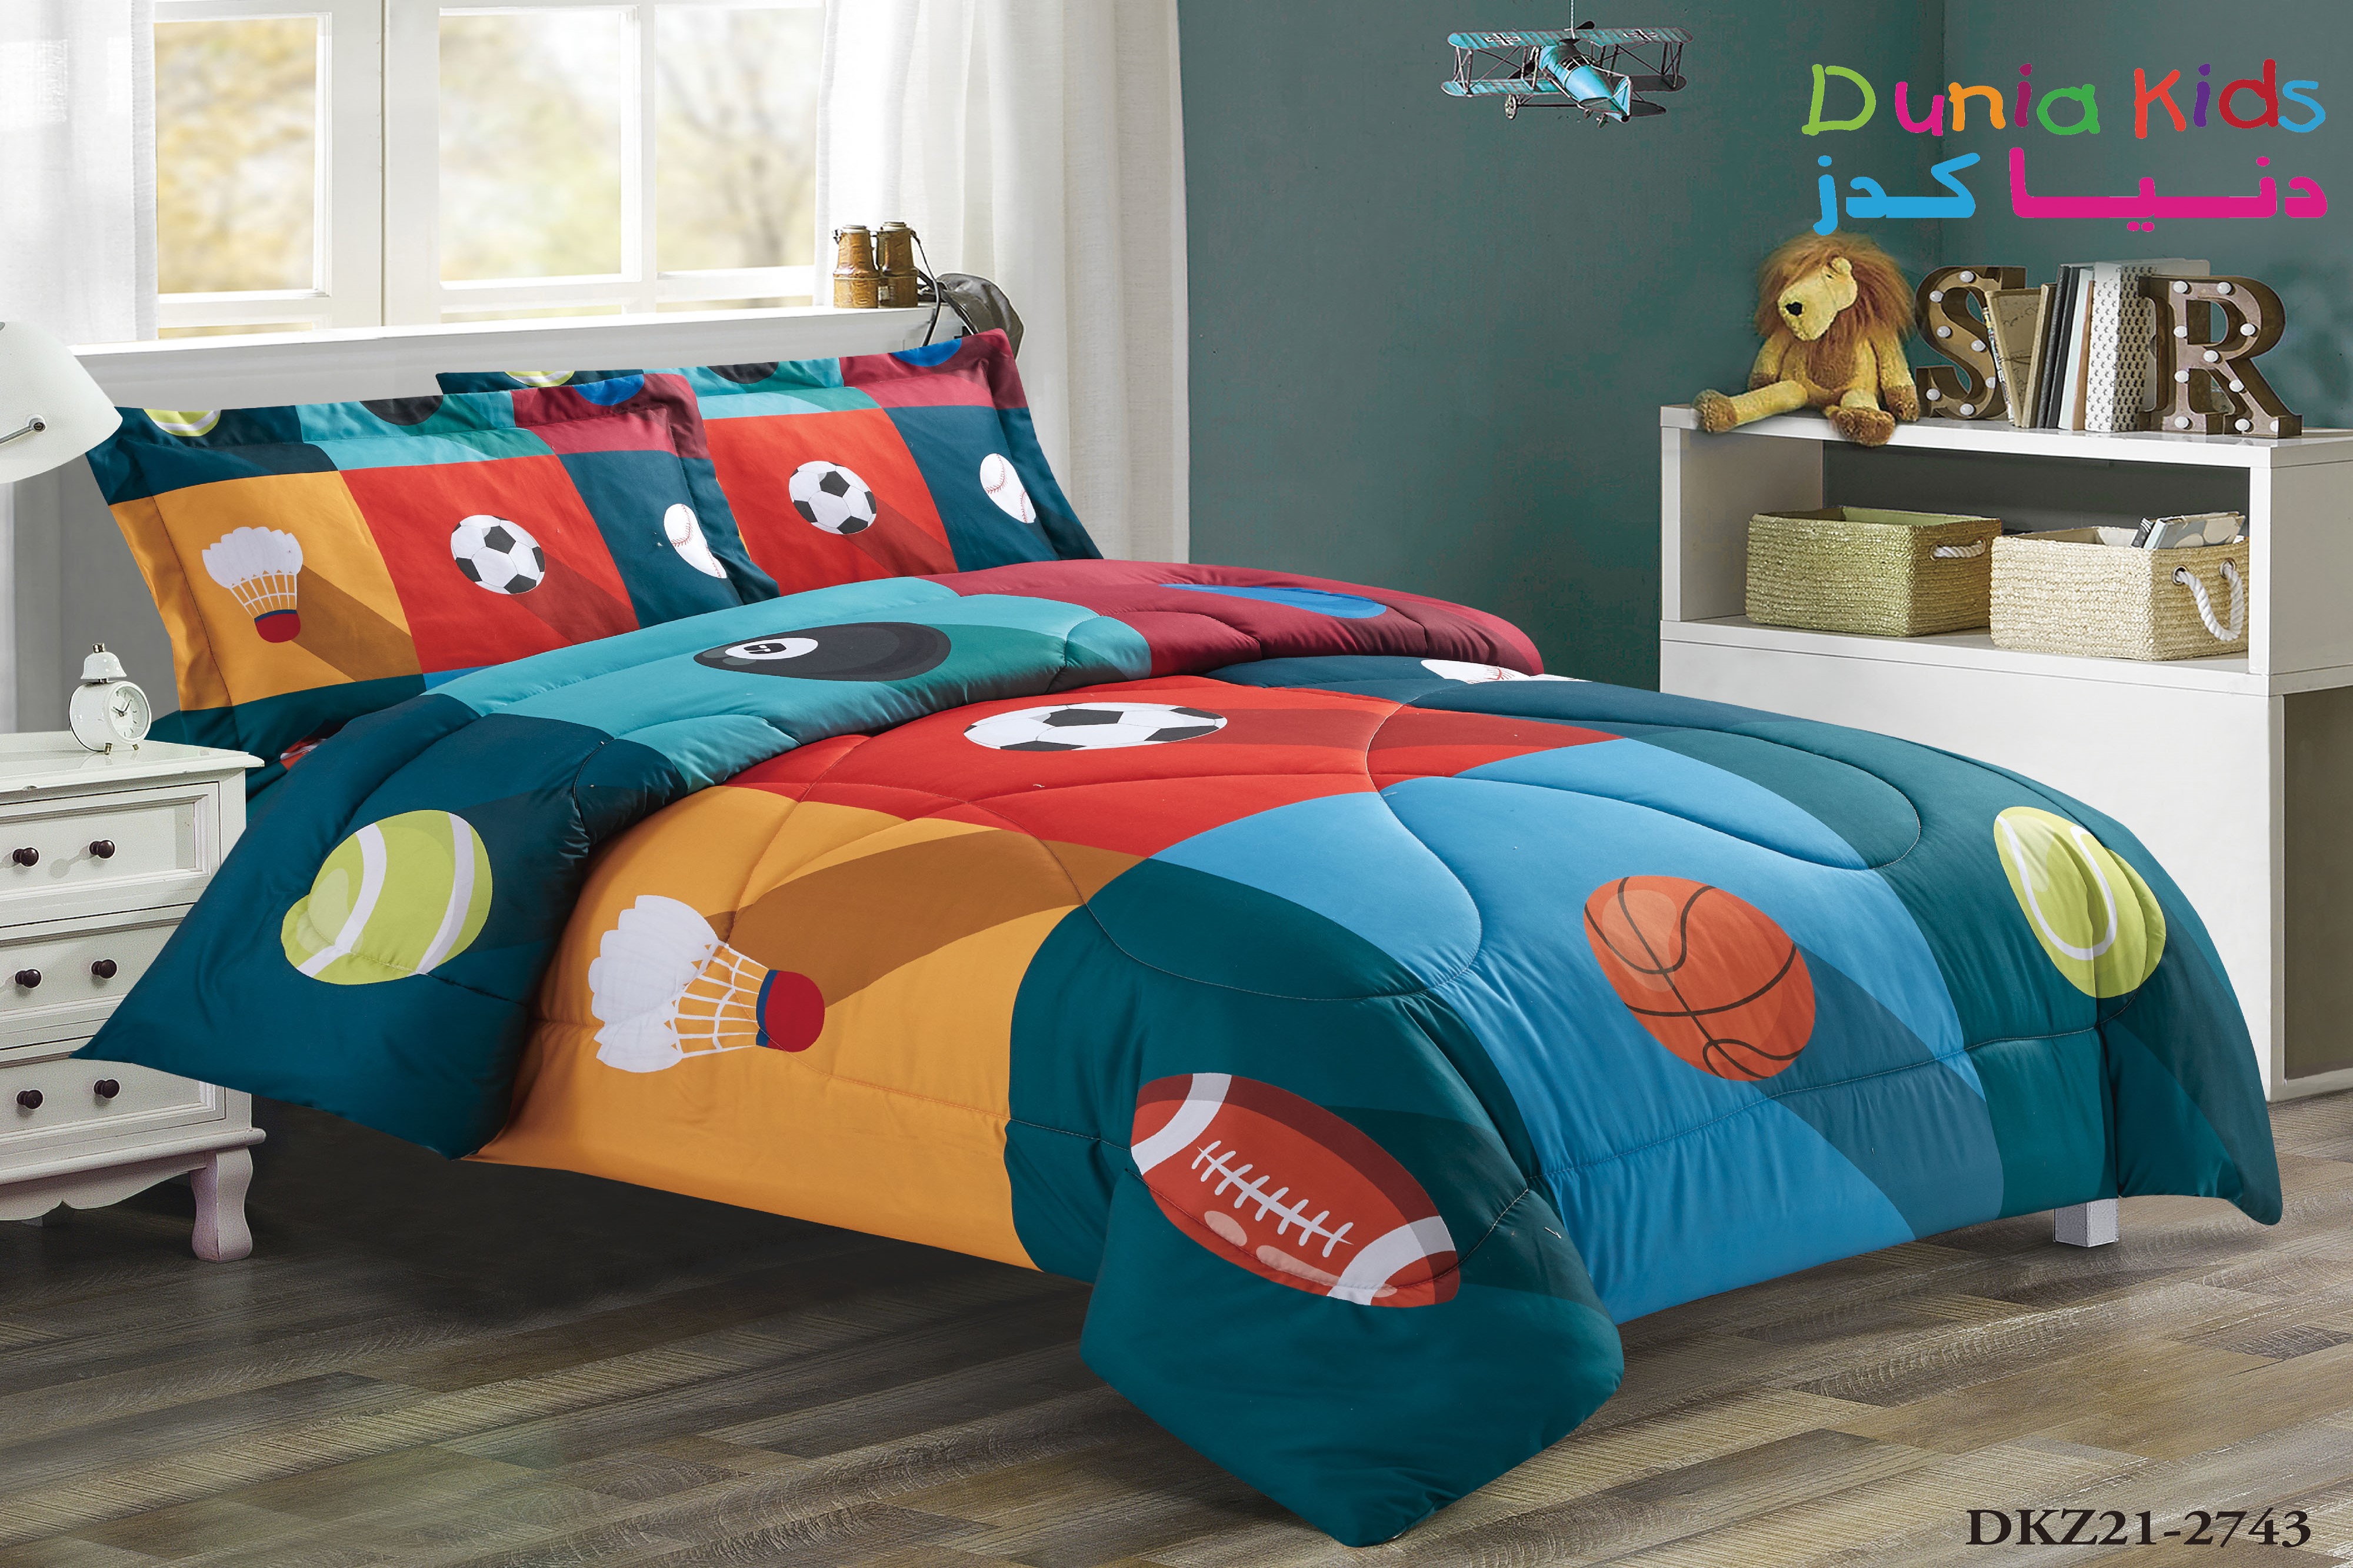 Dunia Kids Comforter 4Pcs Set